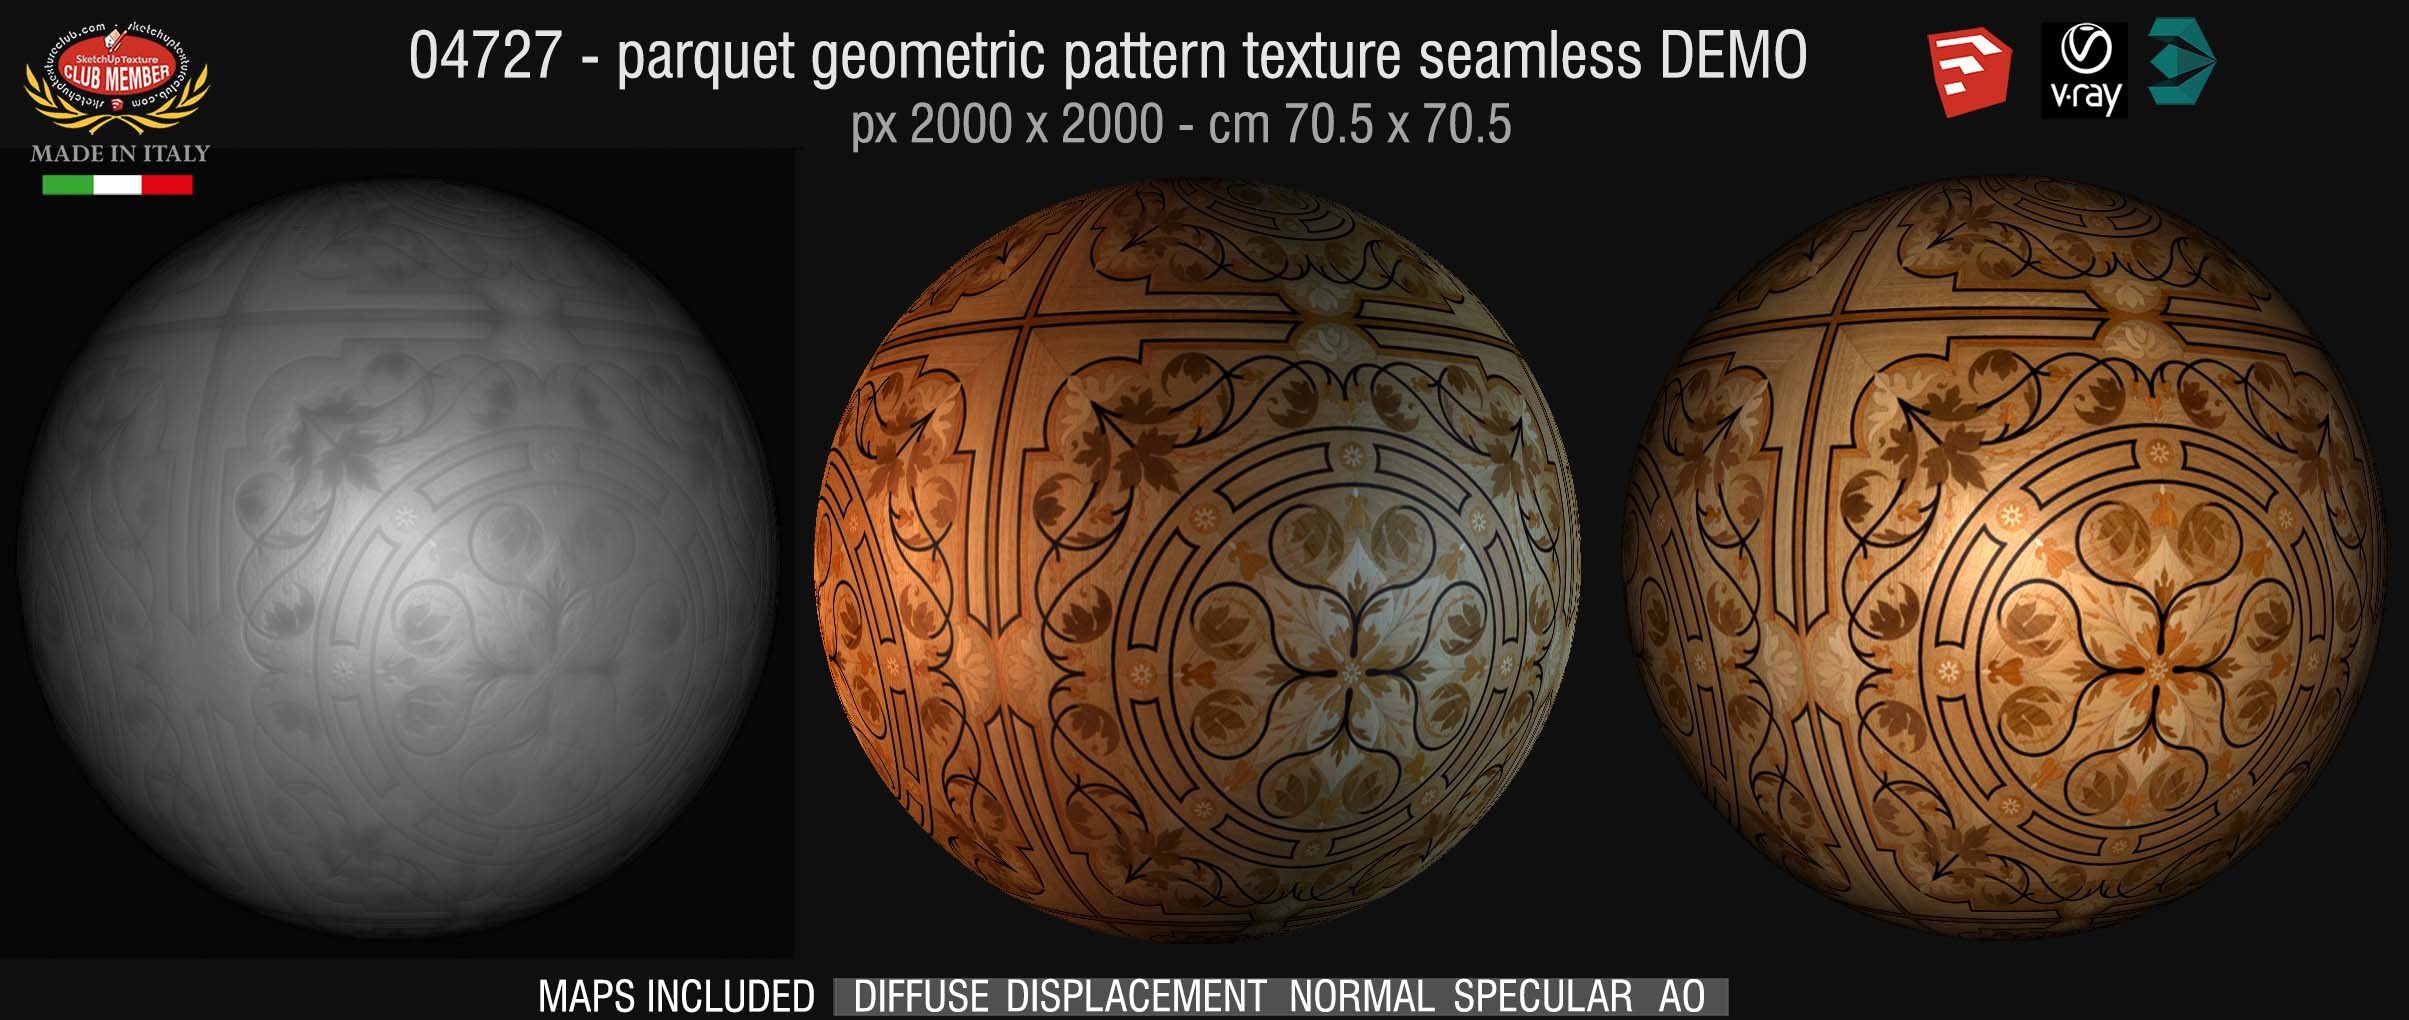 04727 HR Parquet geometric pattern texture seamless + maps DEMO